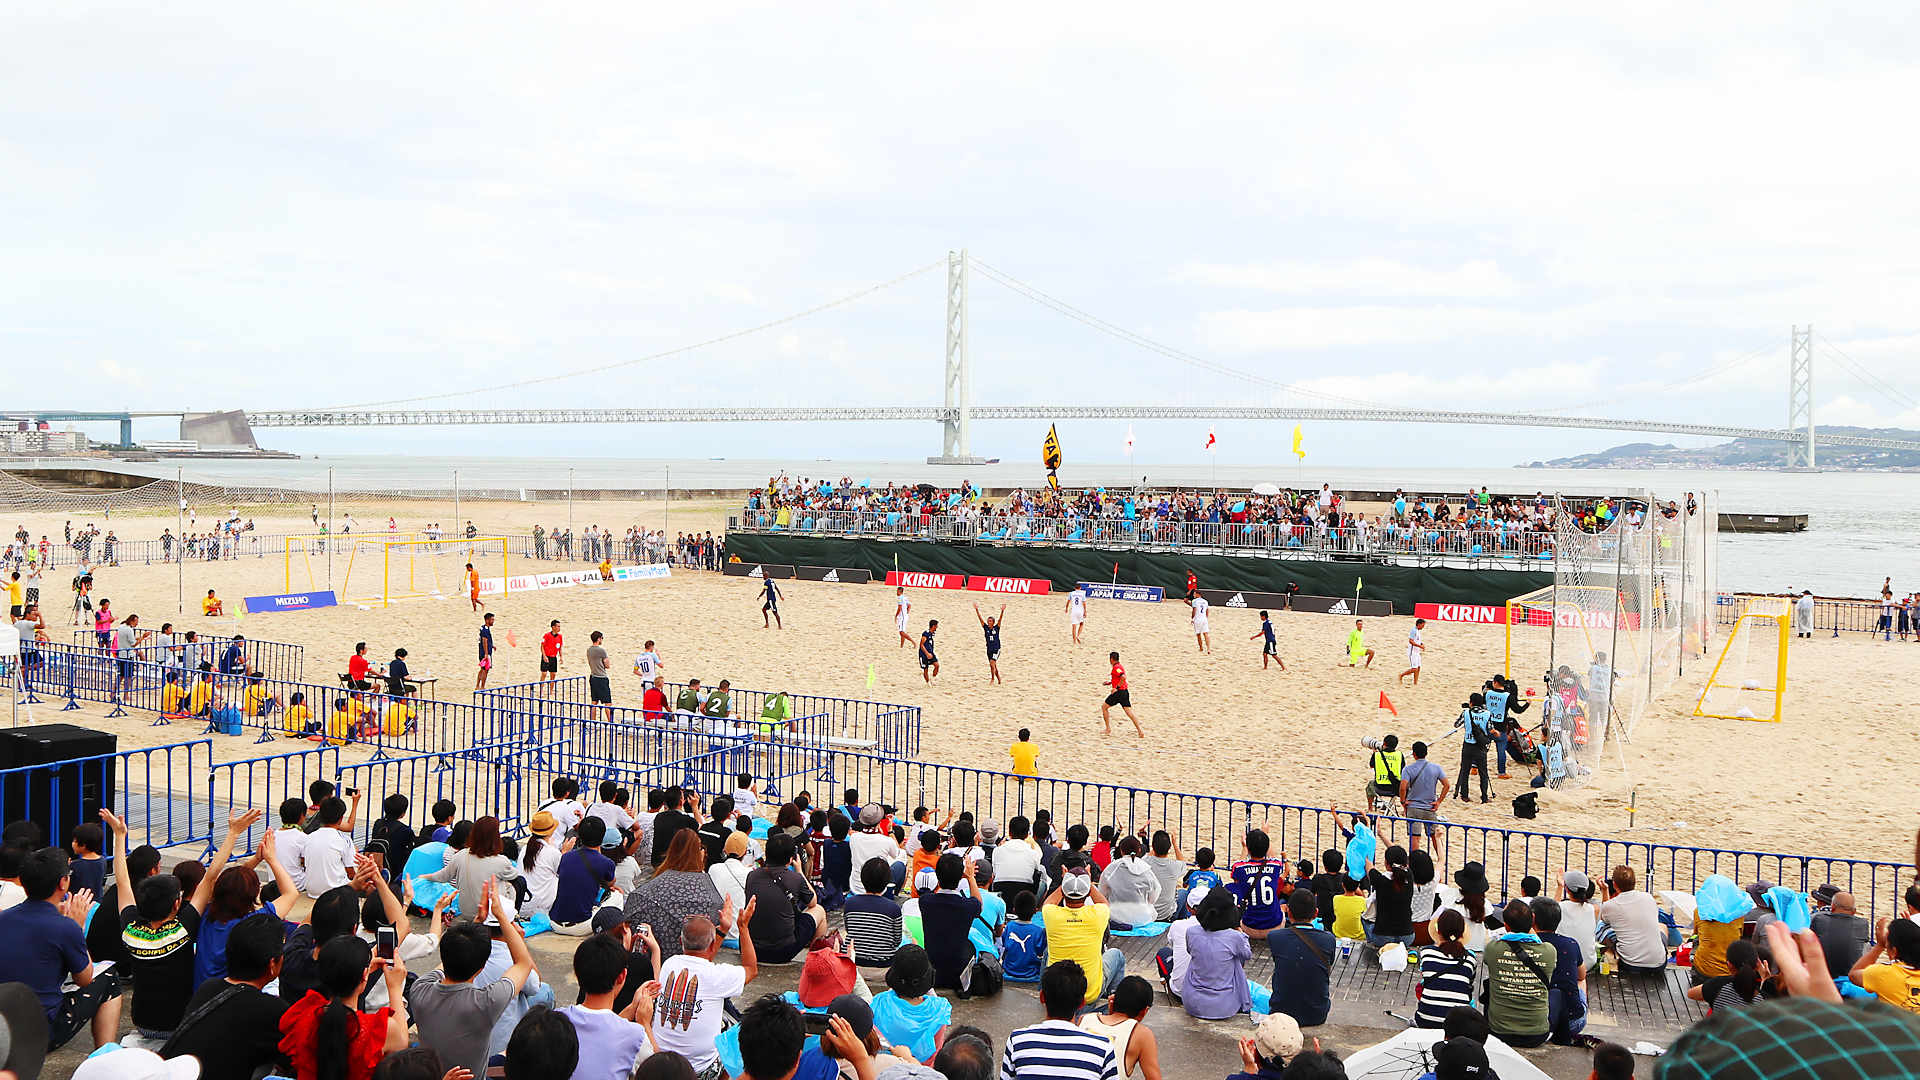 ビーチサッカー国際親善大会19 大蔵海岸公園 大蔵海岸海水浴場